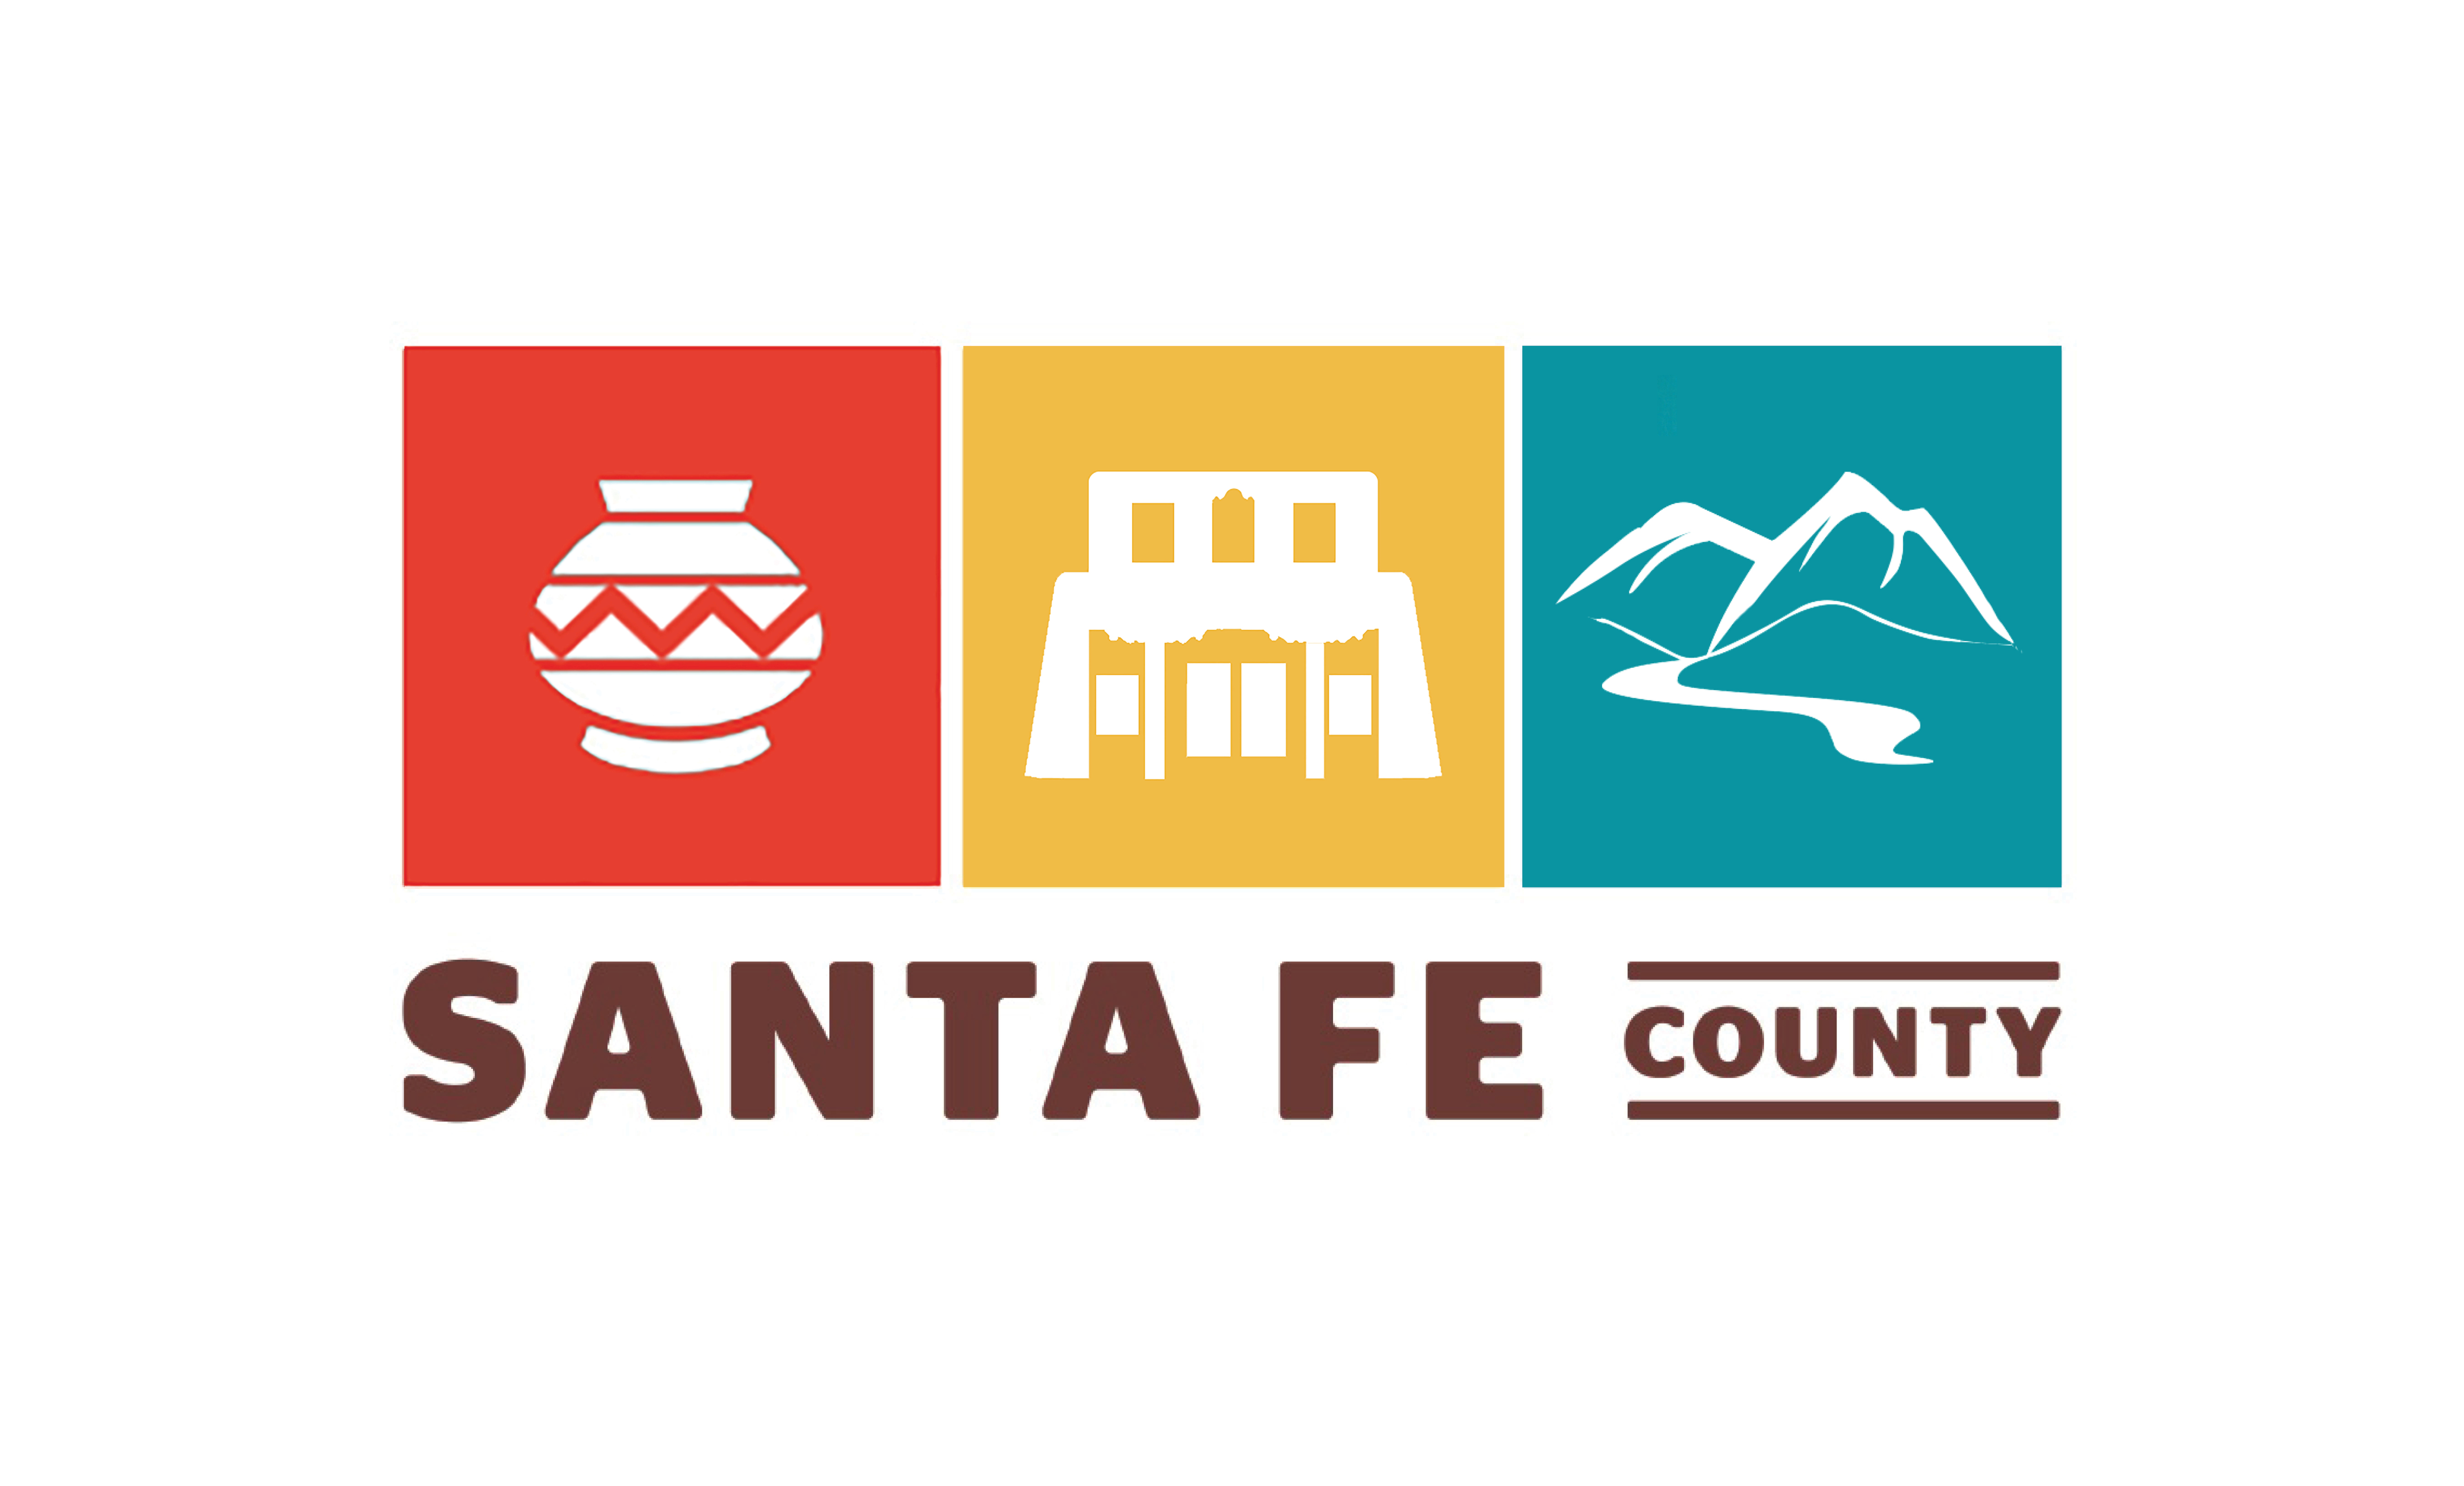 Visit the Santa Fe County homepage